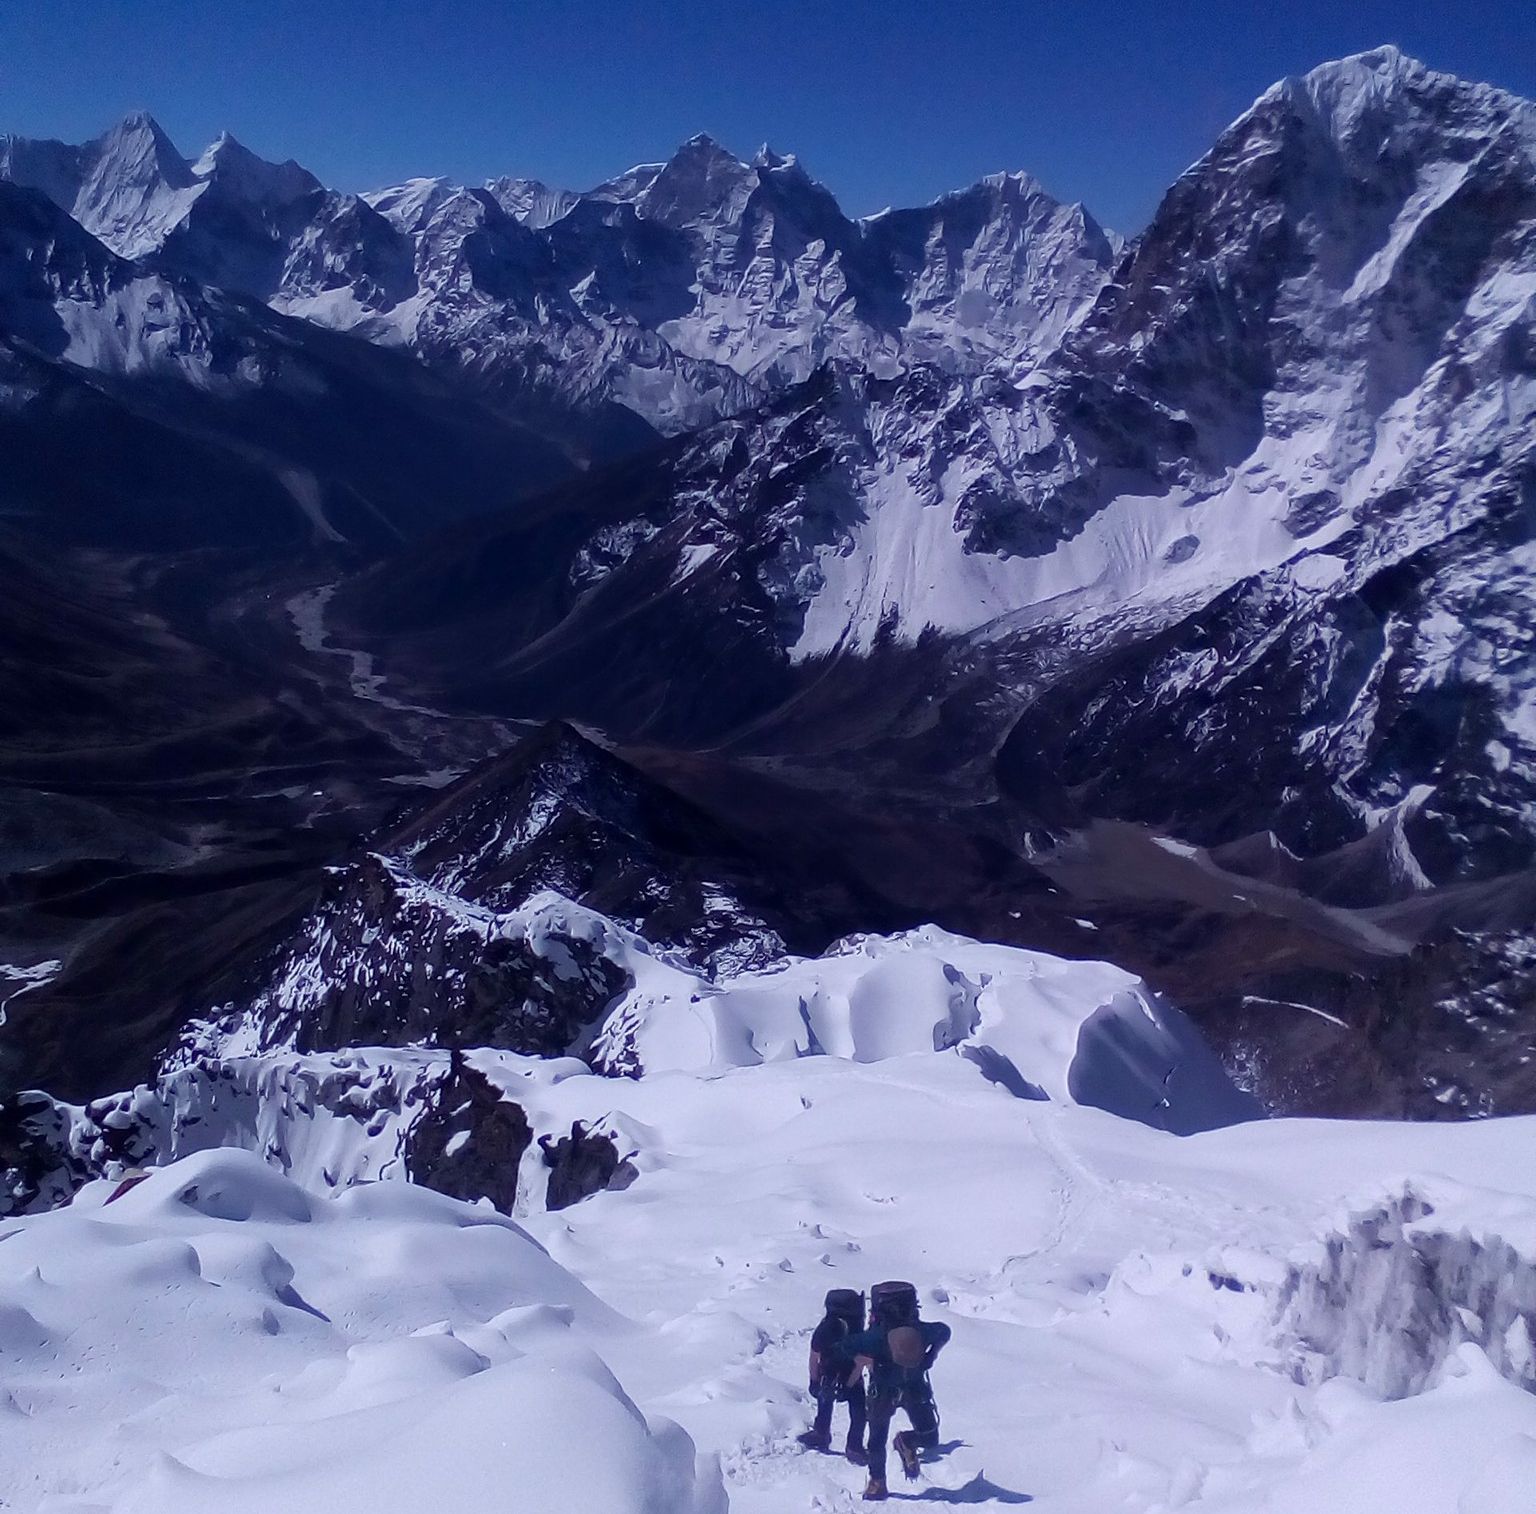 View from Lobuje East Peak in the Khumbu Region of the Nepal Himalaya